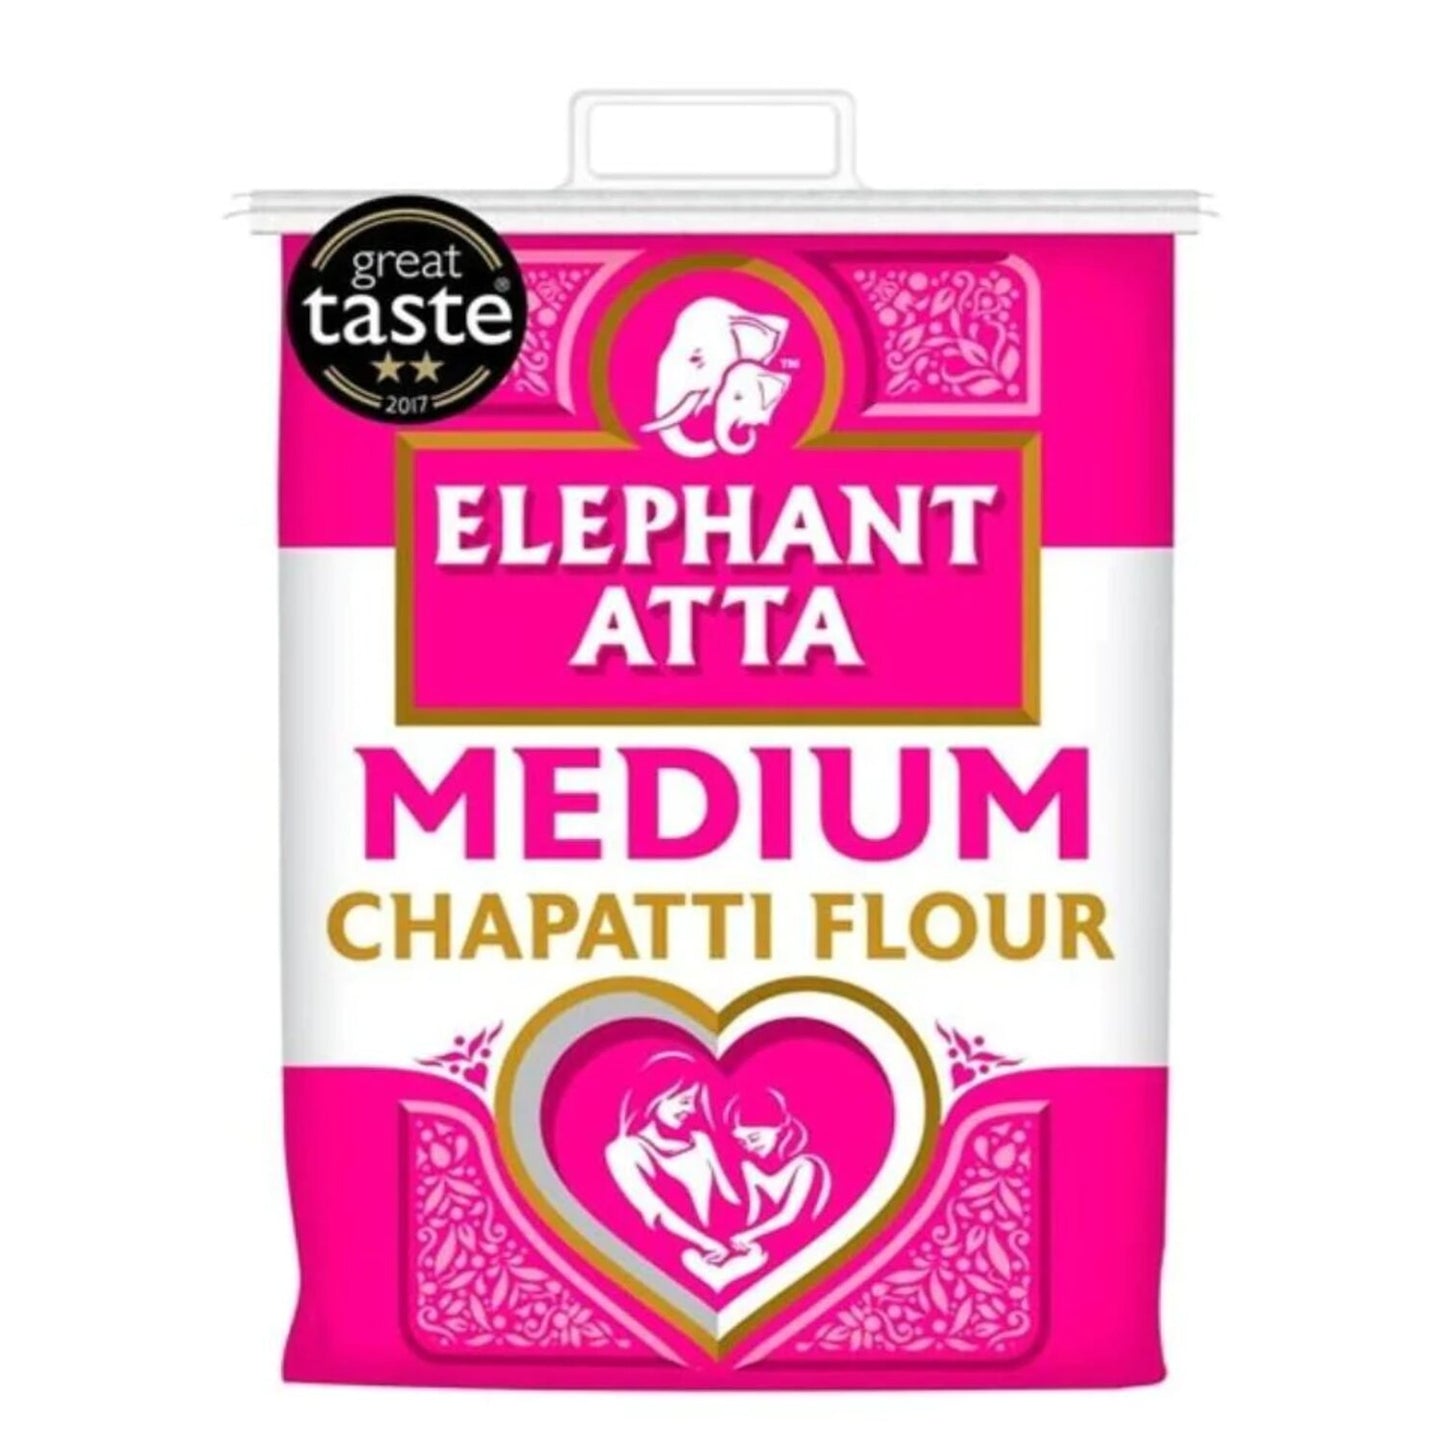 Elephant Atta Medium Chapatti Flour 5kg